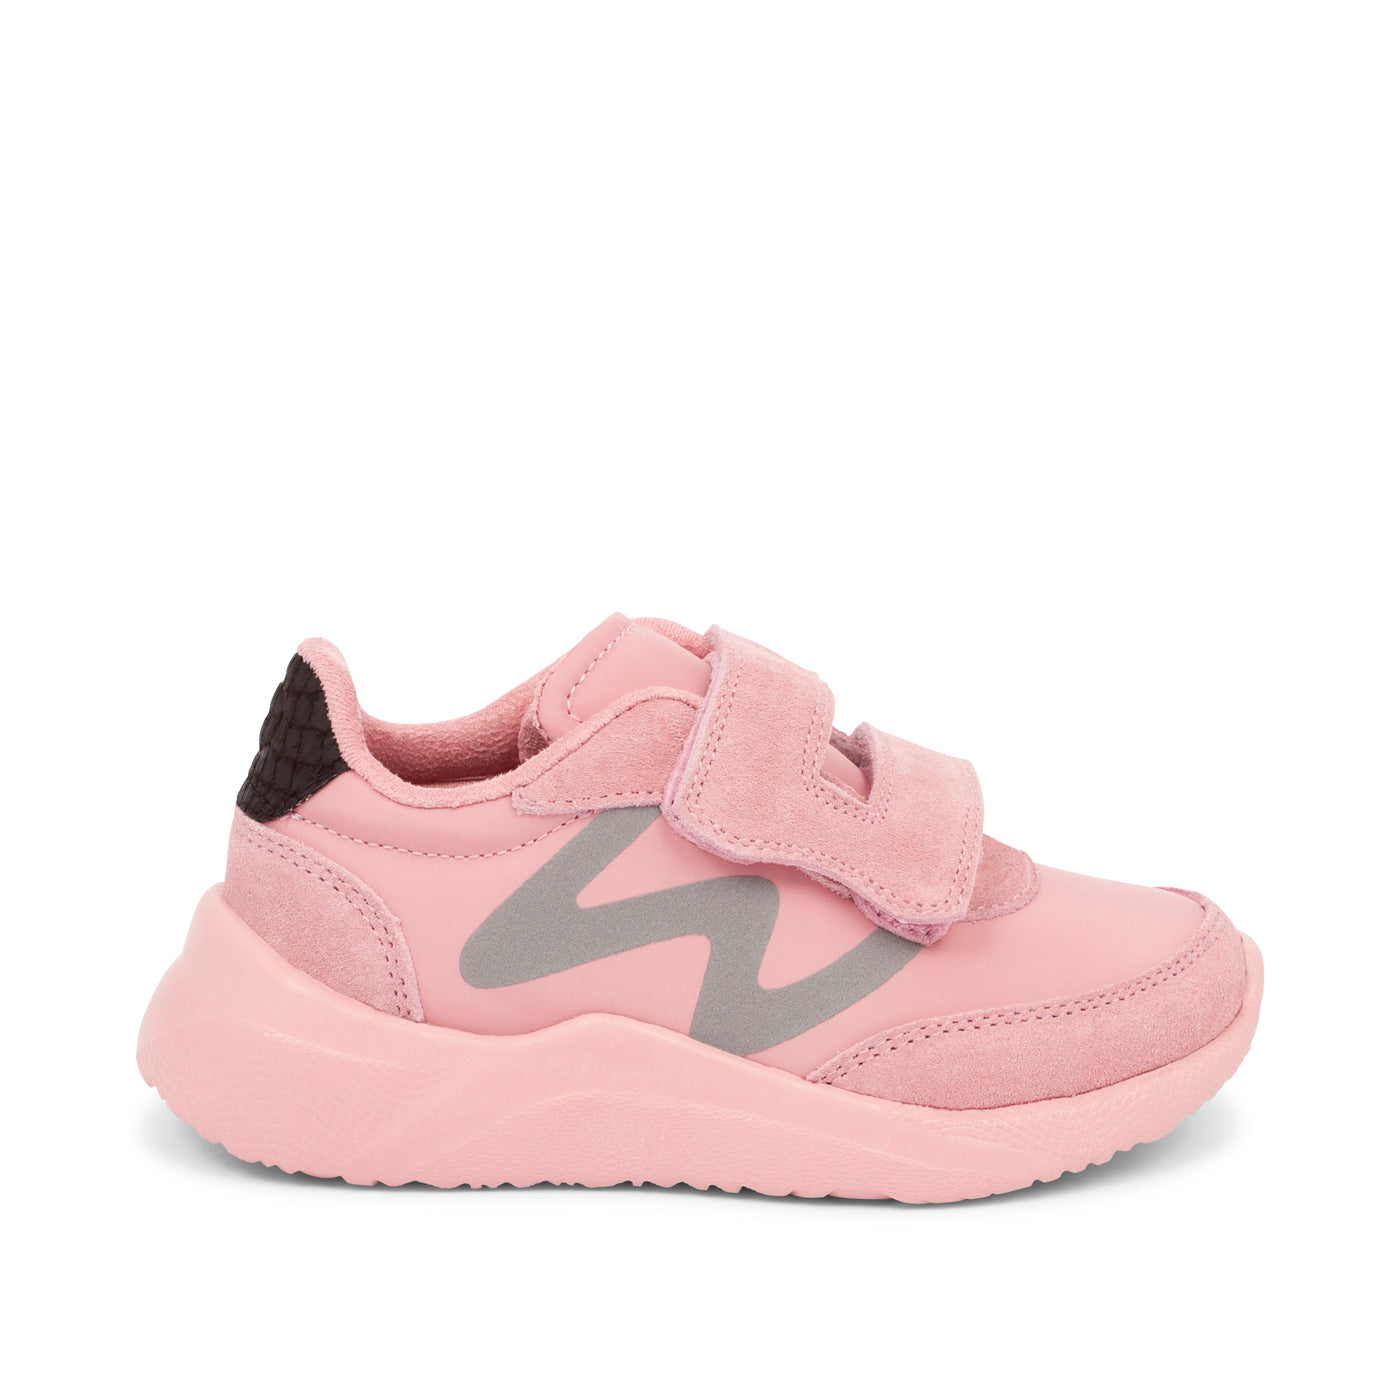 WODEN KIDS Ollie Sneakers 761 Soft Pink